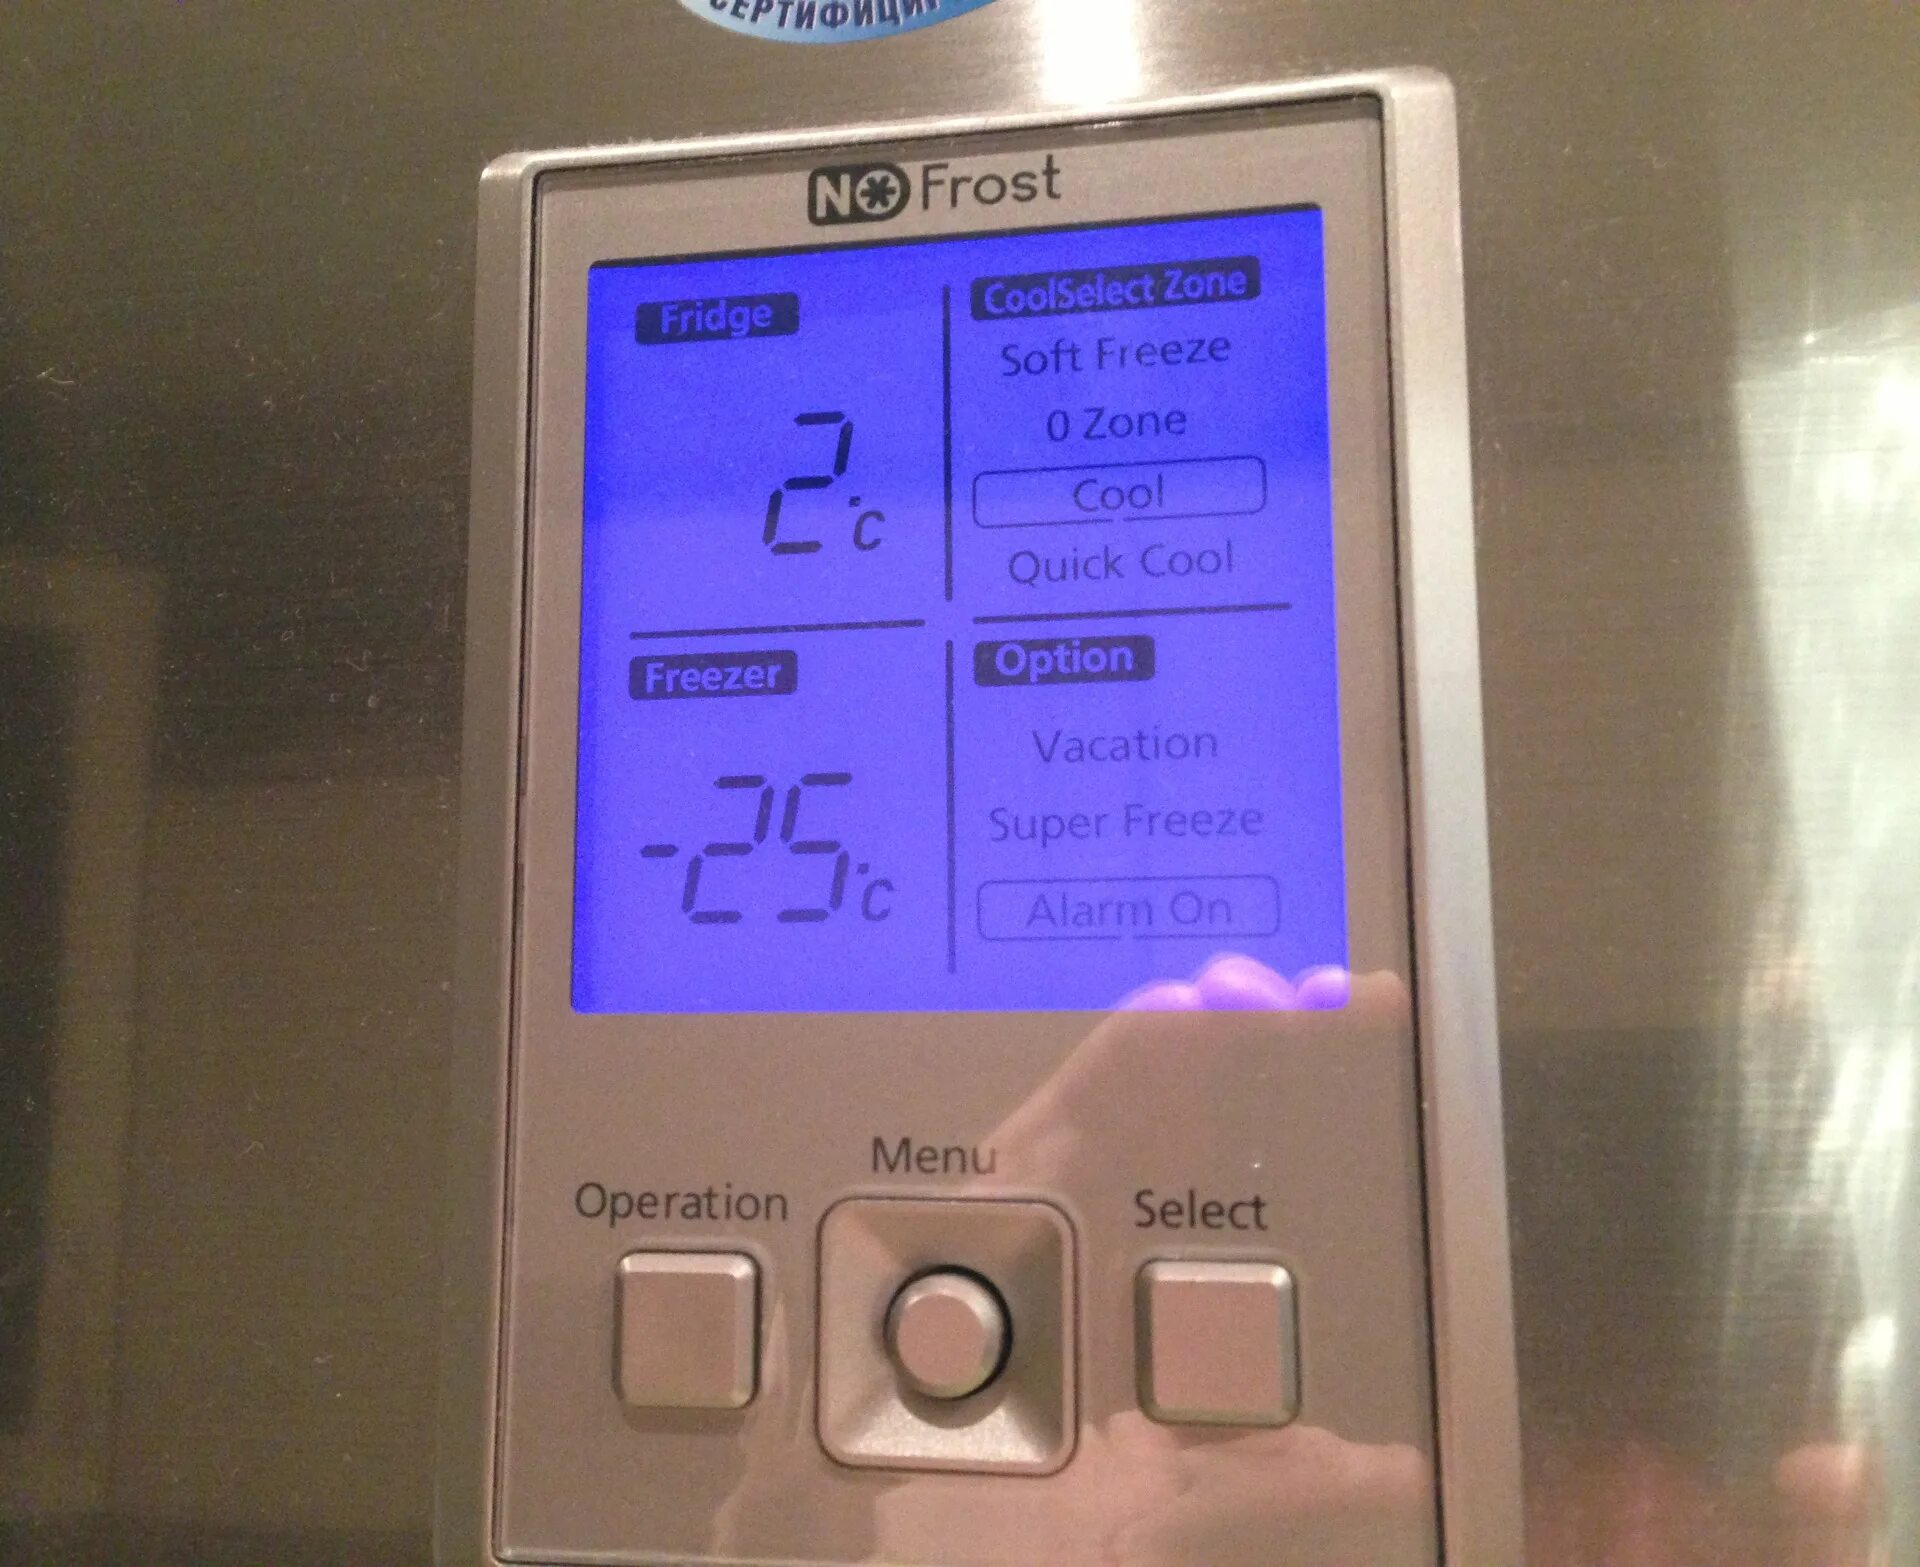 Холодильник Samsung vacation super Freeze Alarm on. Samsung холодильник с экраном super Freeze. Soft Freeze. Alarm on на холодильнике Samsung.